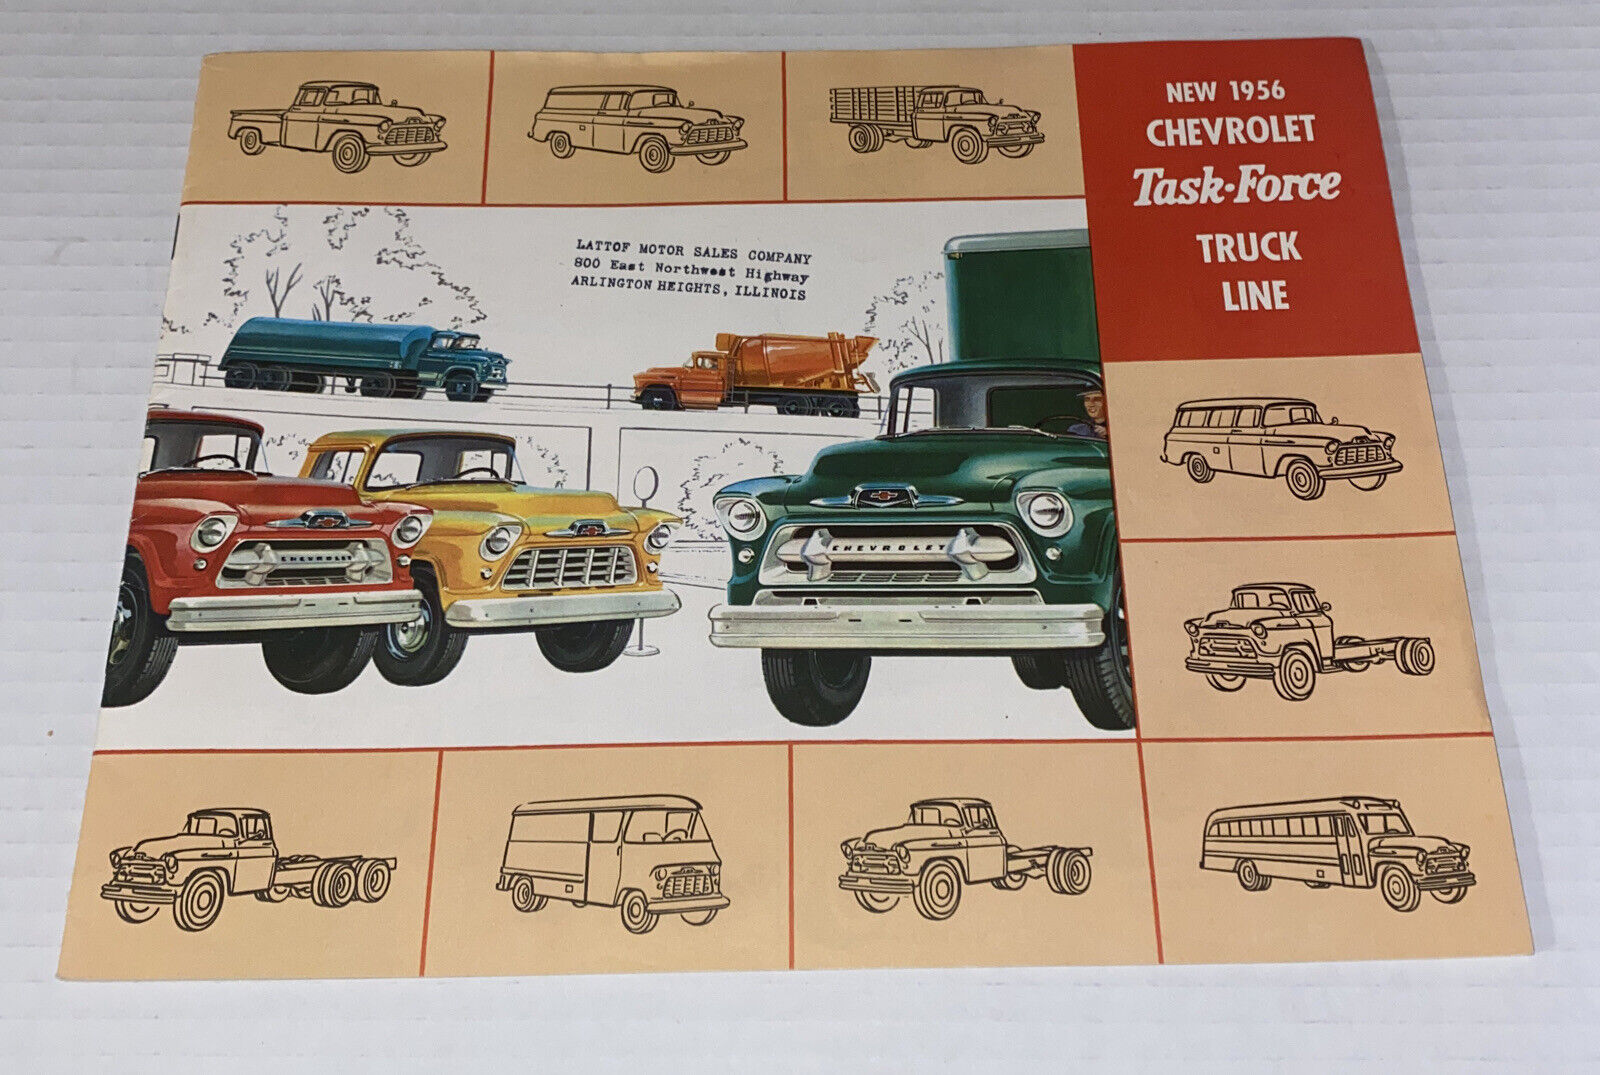 VTG 1956 Chevrolet Task Force Truck Line Brochure Lattof Arlington Hts IL Prop